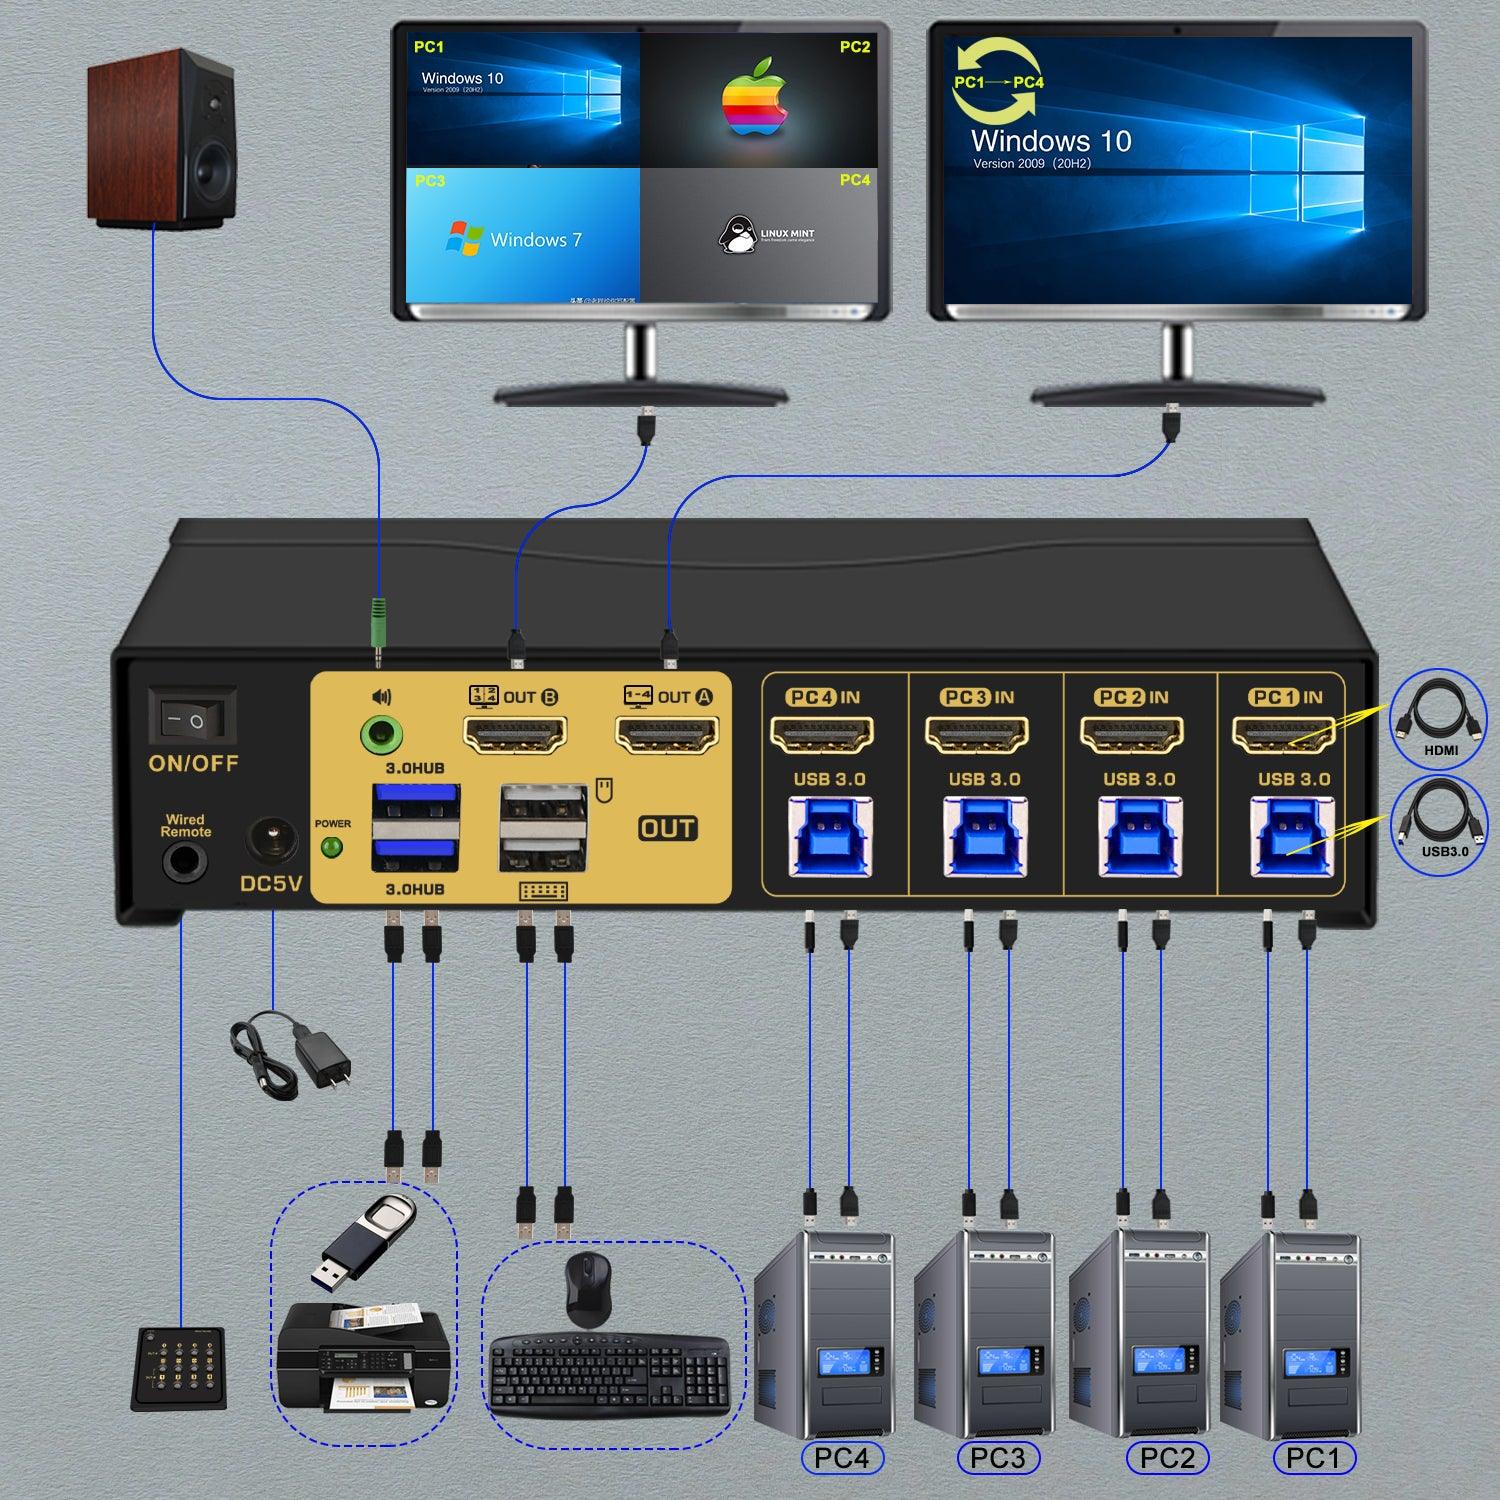 CKL 4x2 Multi-View KVM Switch Dual Monitor HDMI 4K@30Hz CKL-42MVKVM - CKL KVM Switches